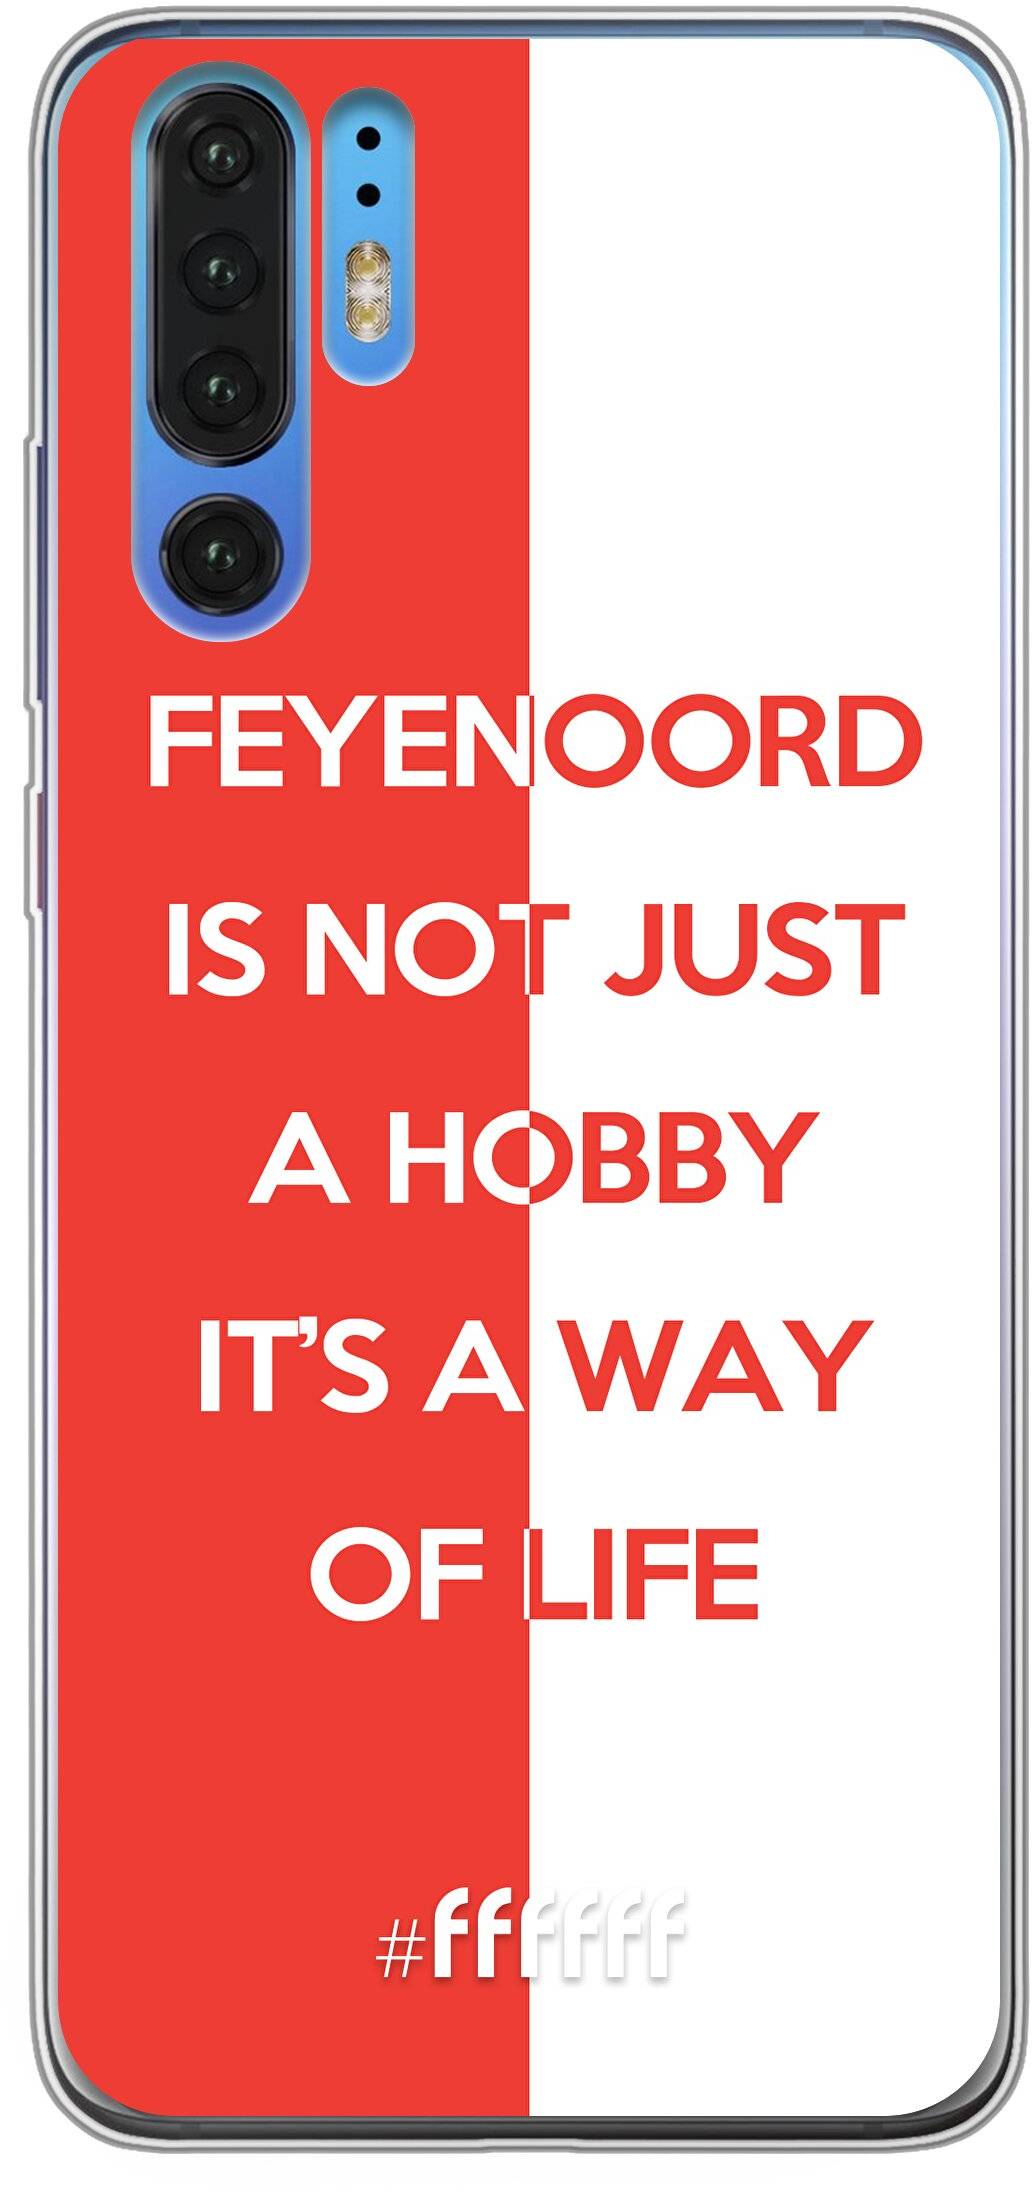 Feyenoord - Way of life P30 Pro